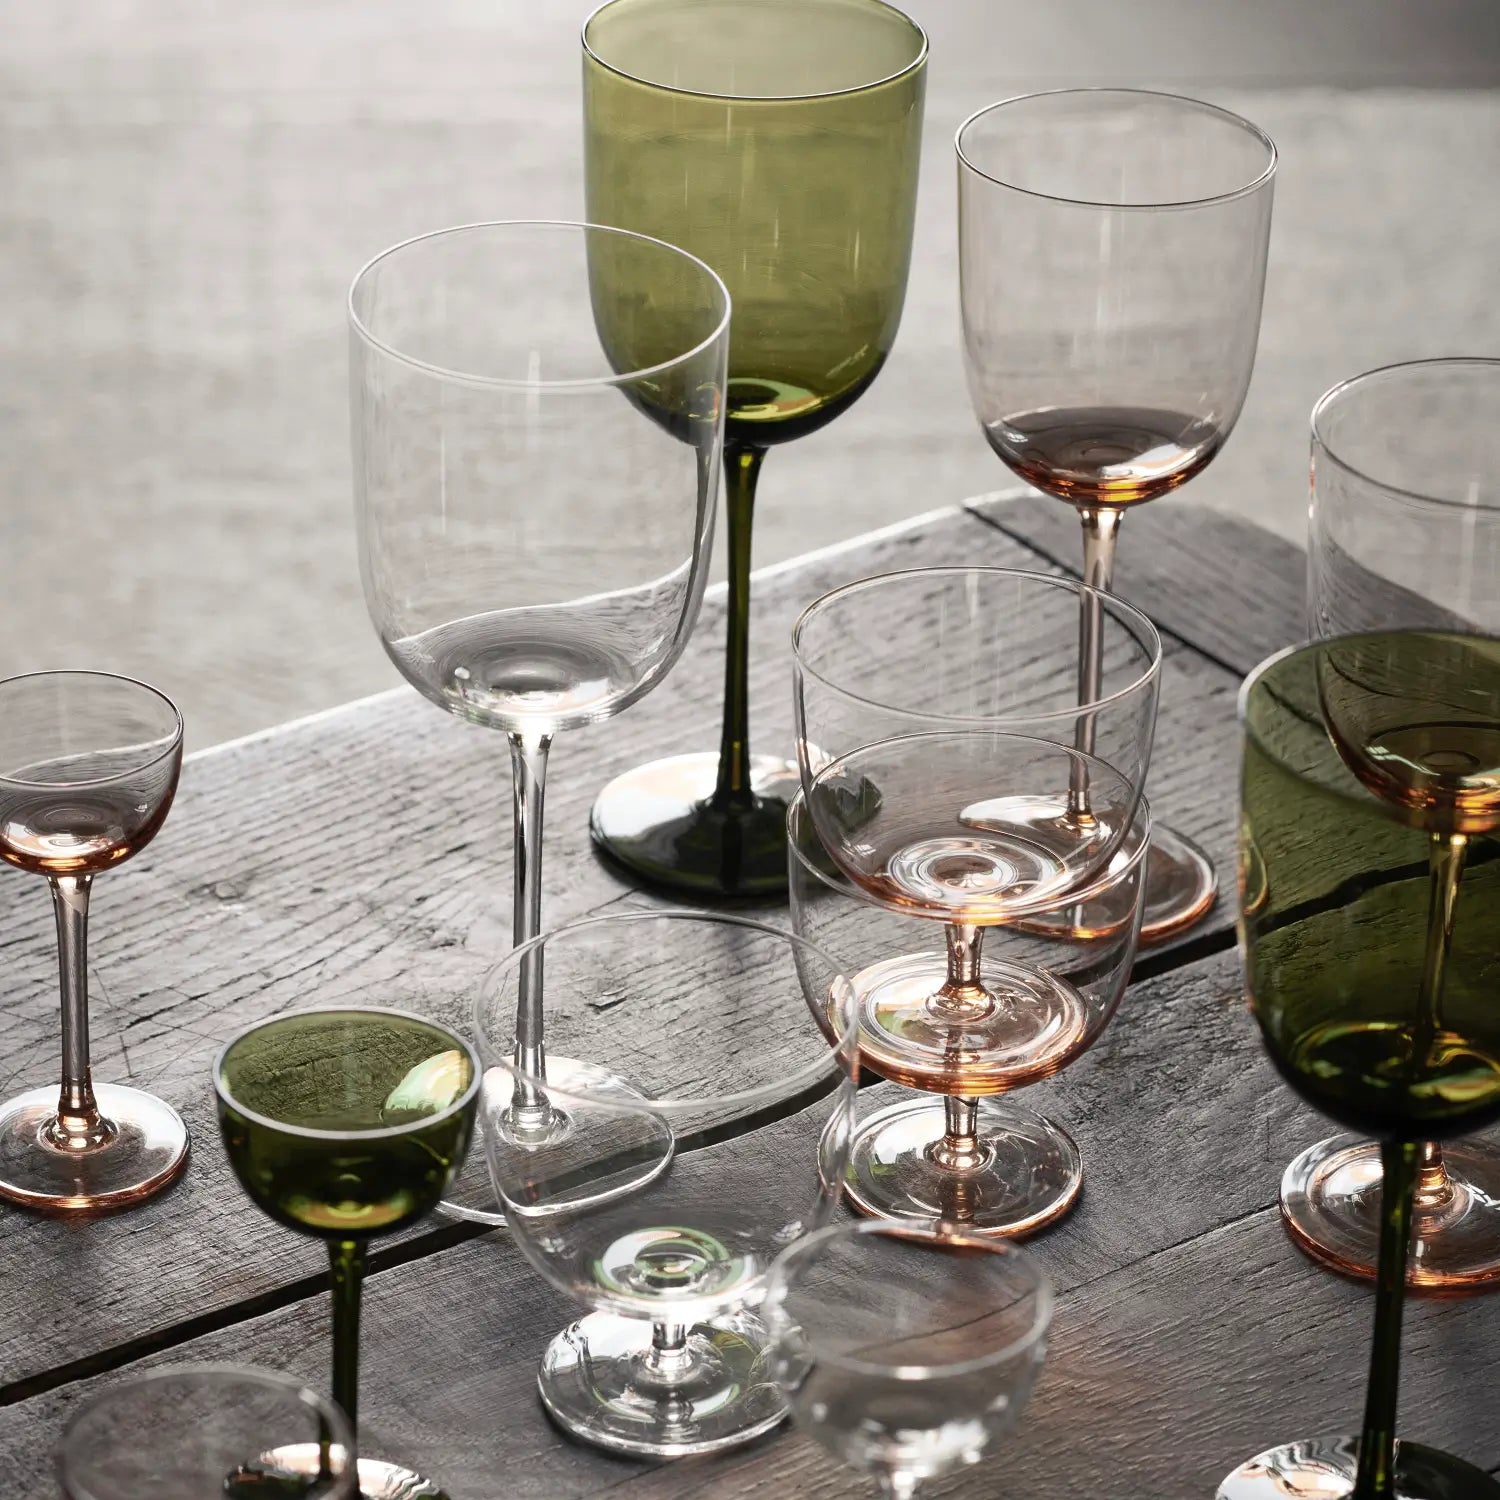 Ferm Living Host Red Wine Glasses - Set of 2 Moss Green - KANSO